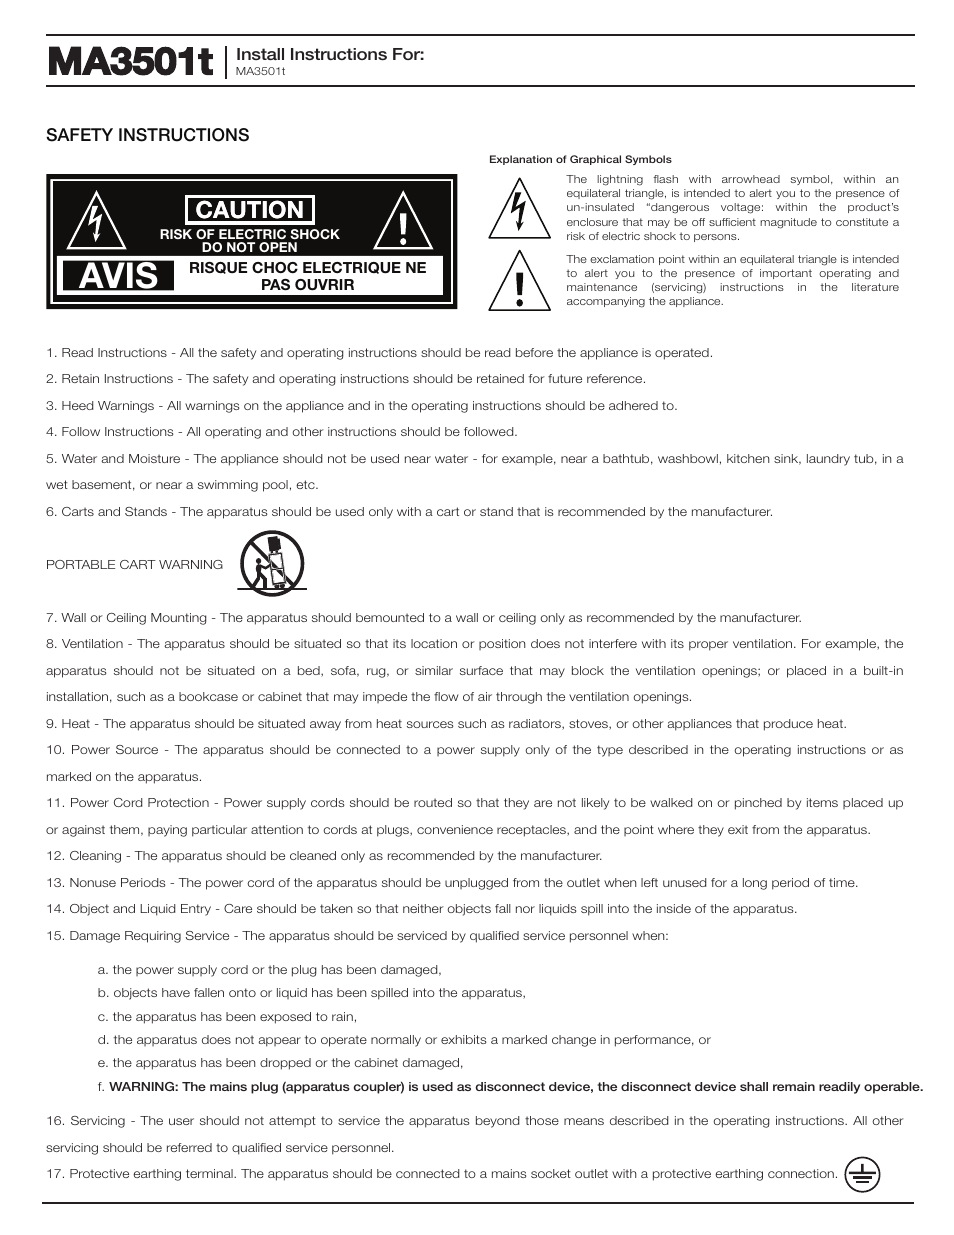 Ma3501t, Avis, Caution | Soundtube MA3501t User Manual | Page 2 / 8